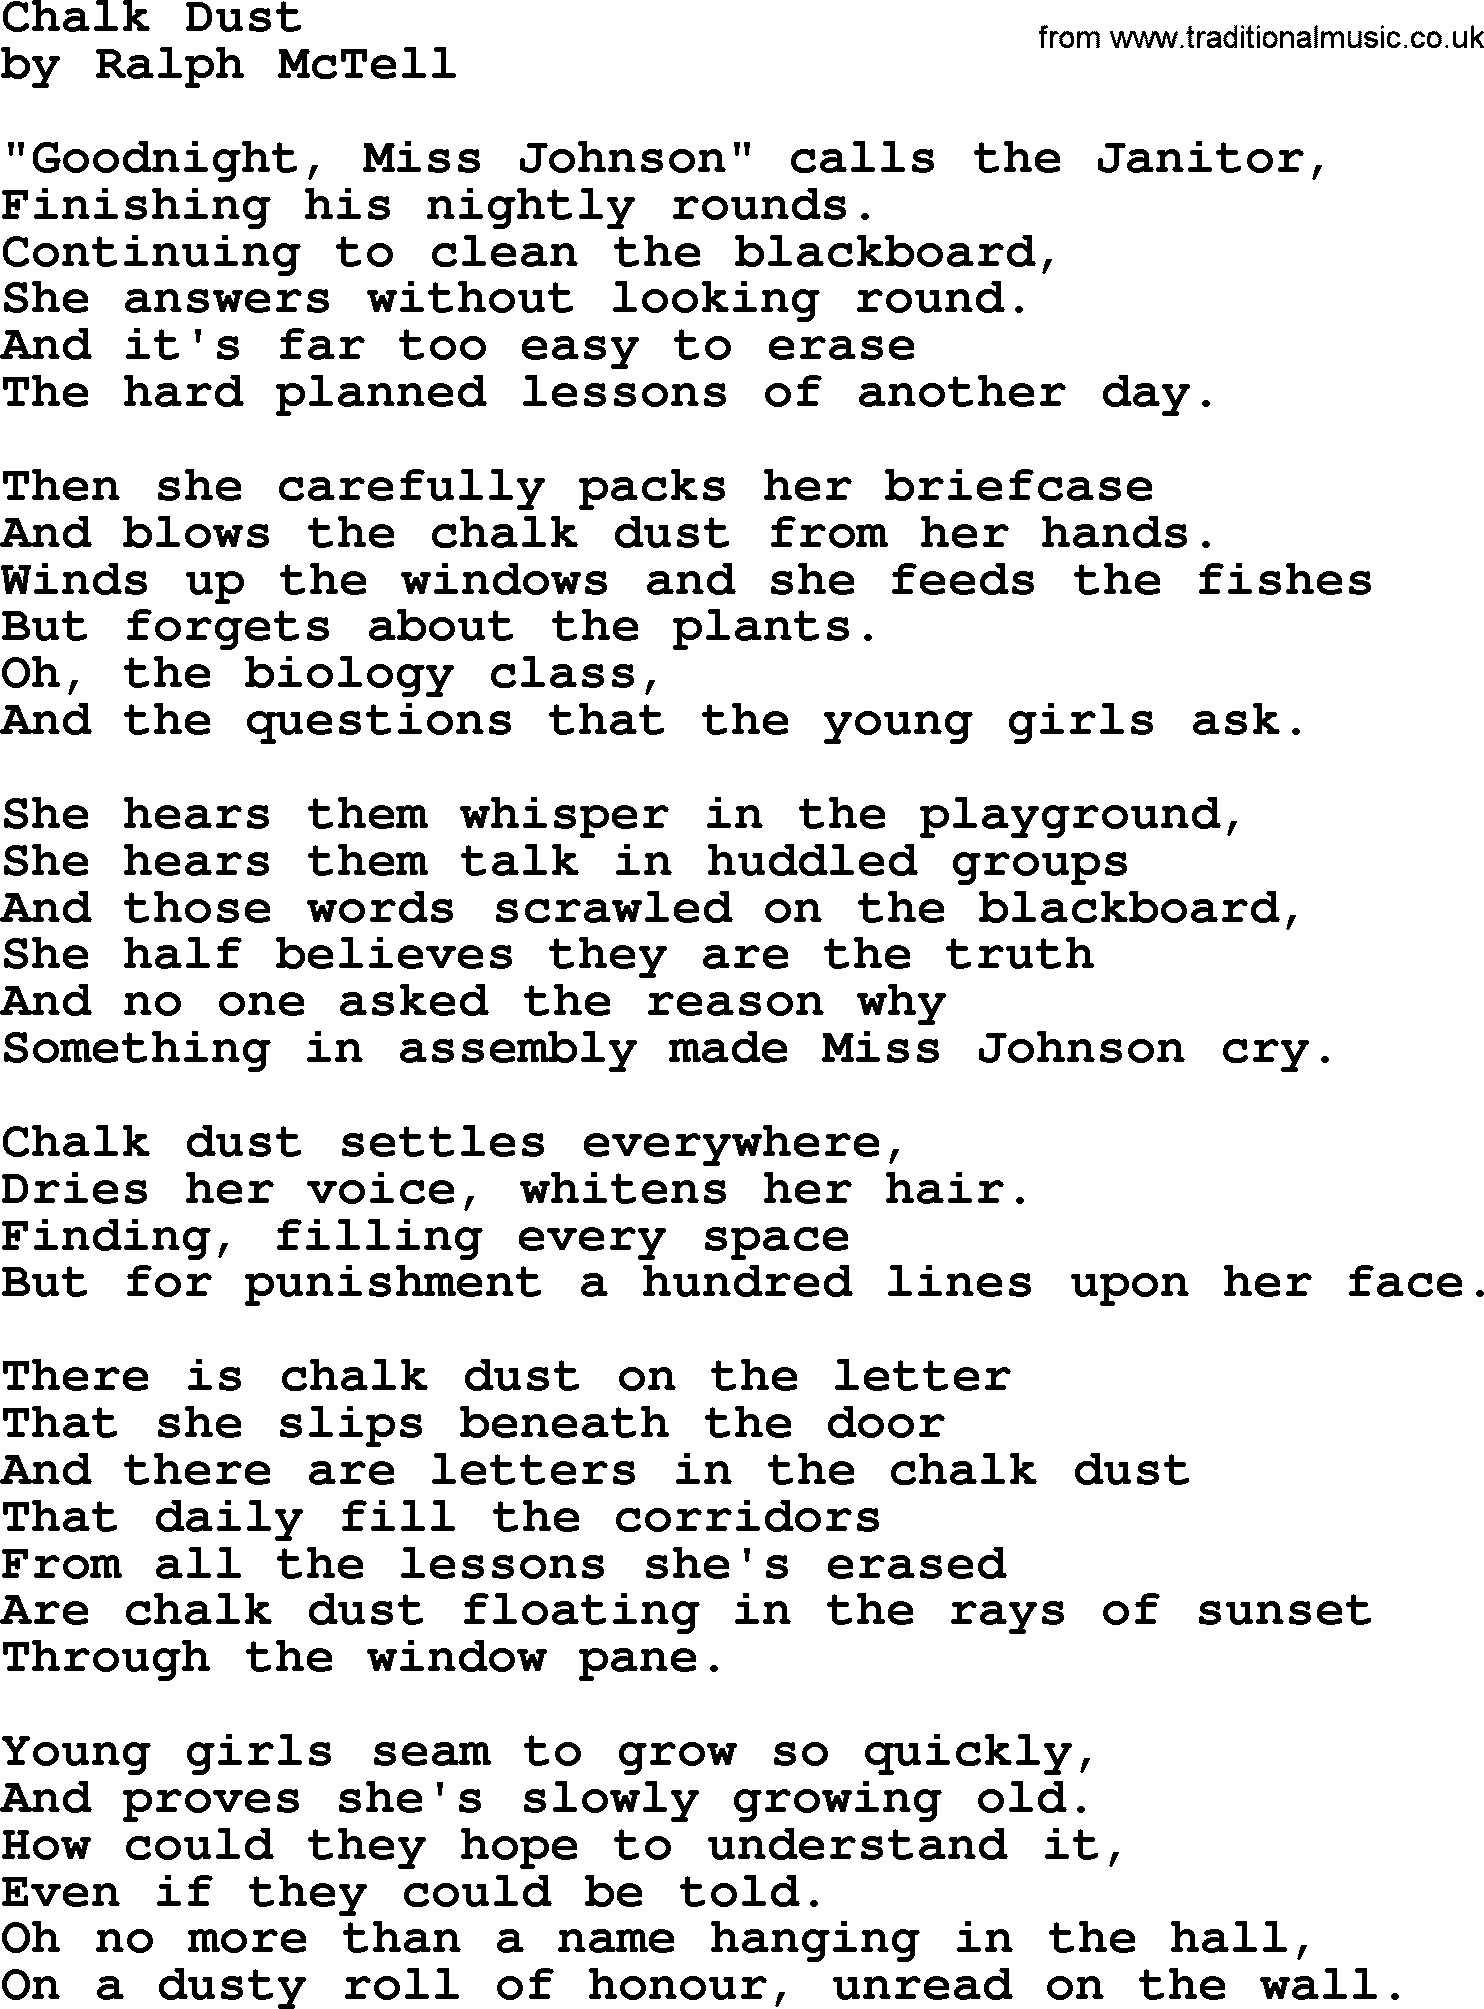 Ralph McTell Song: Chalk Dust, lyrics